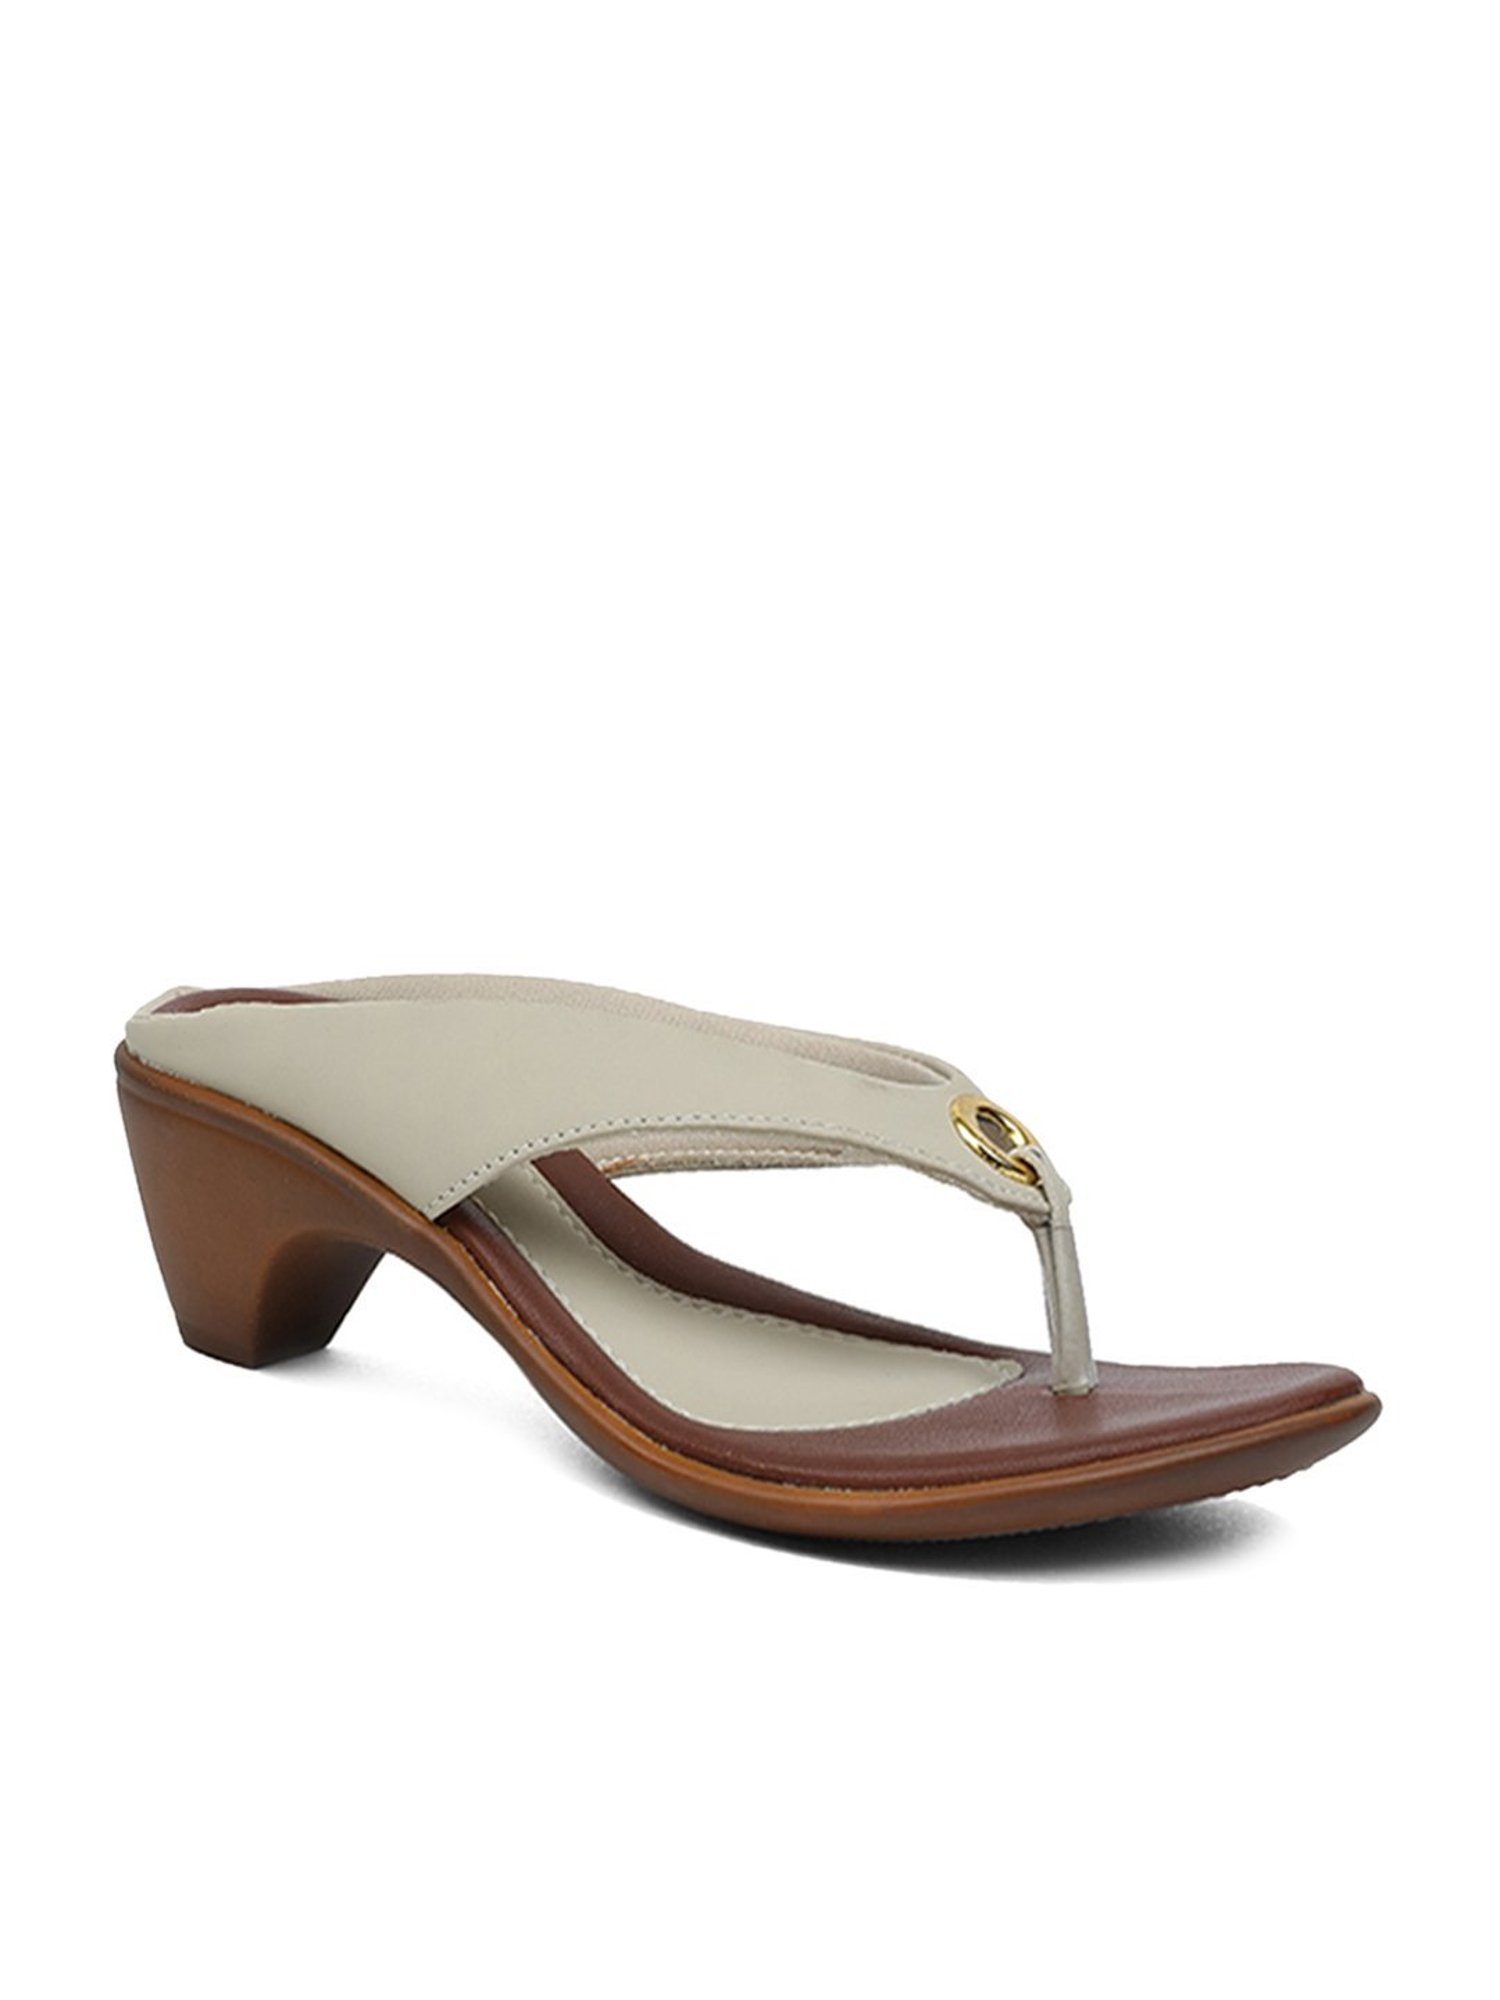 Buy Bata Womens Tricia Sandal Heels, (7618683), UK 3 at Amazon.in